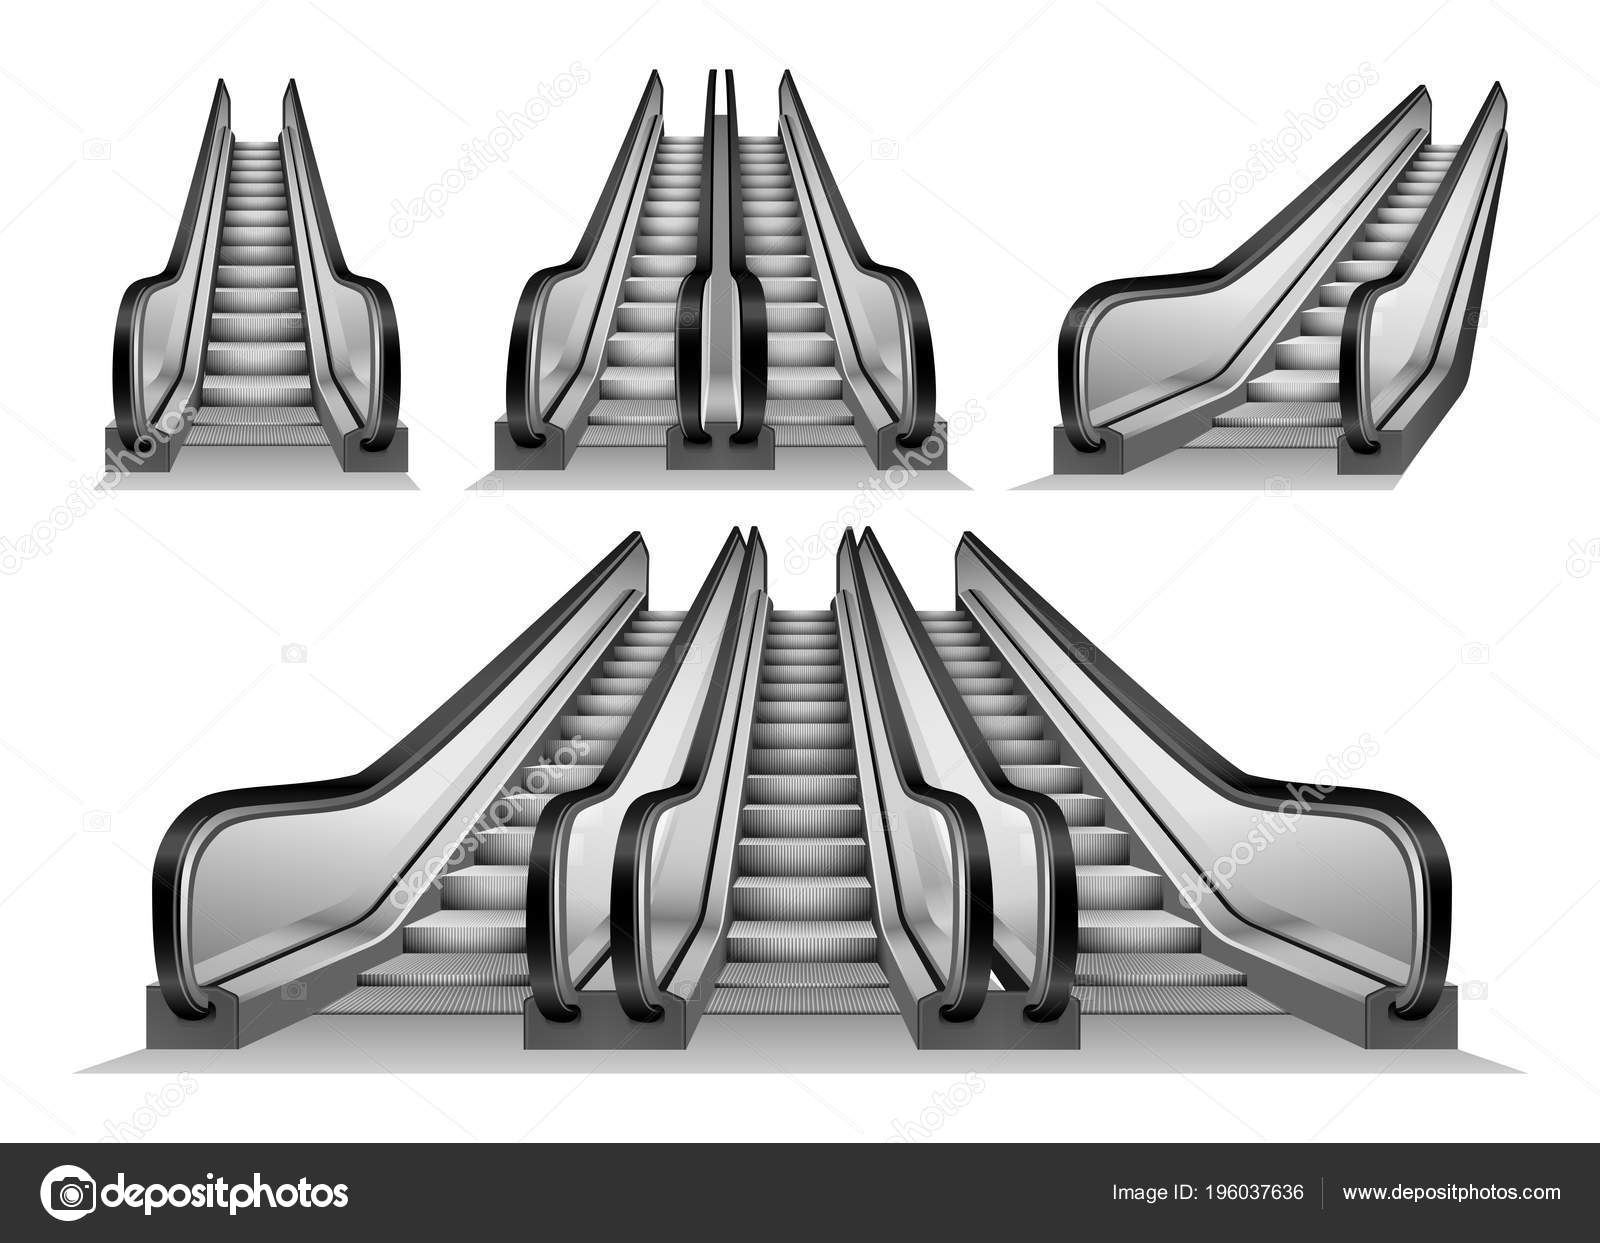 Download Escalator Elevator Mockup Set Realistic Style Vector Image By C Anatolir Vector Stock 196037636